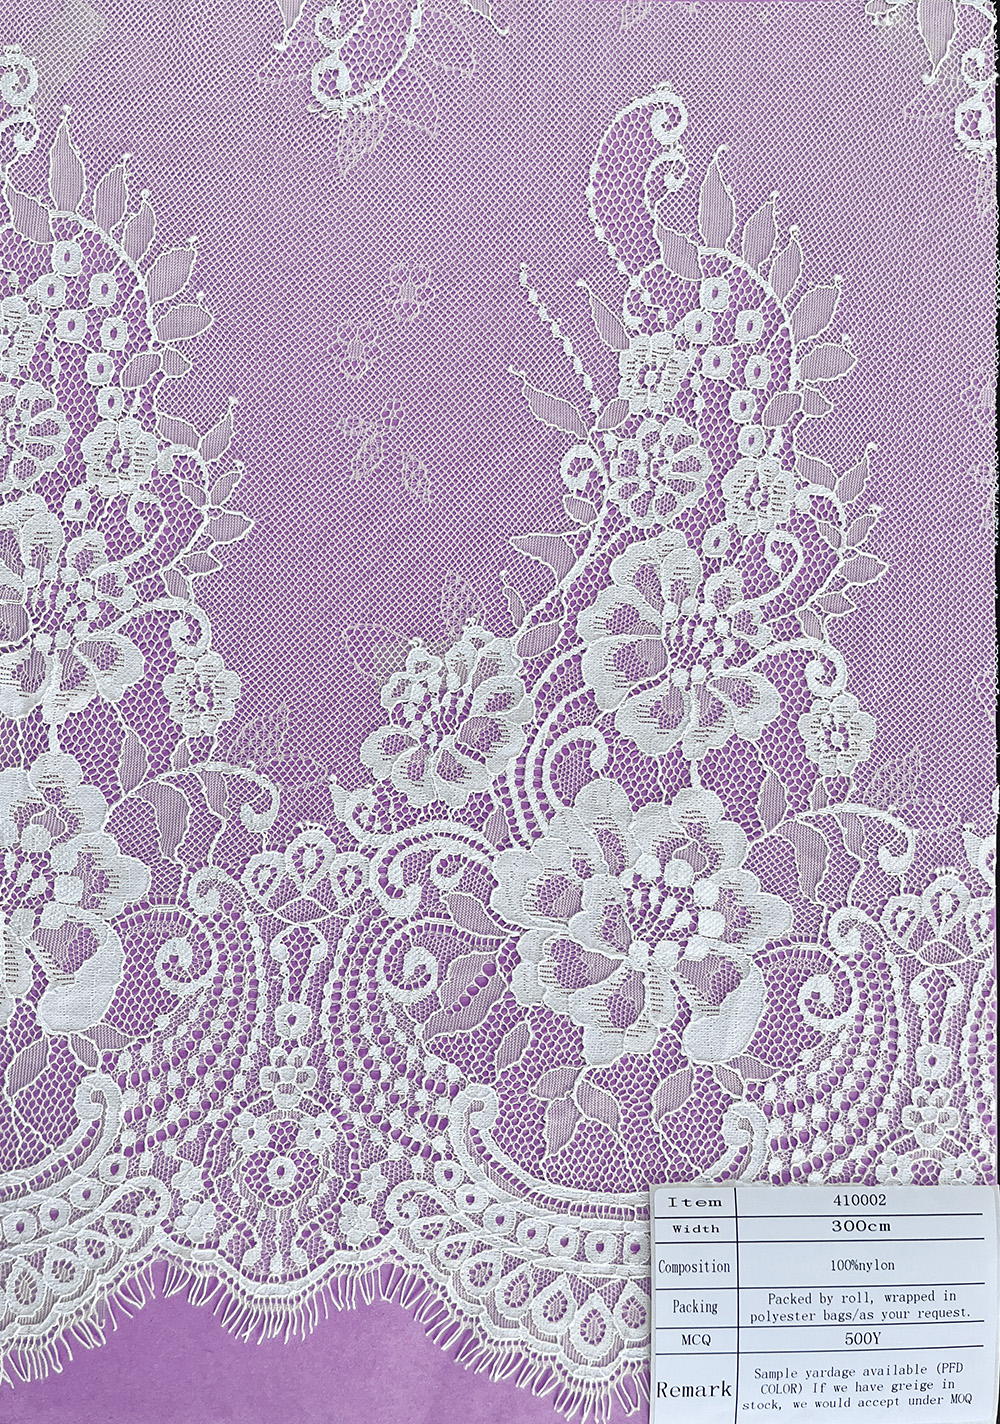 Lizhiying exquisite craft wedding lace fabric